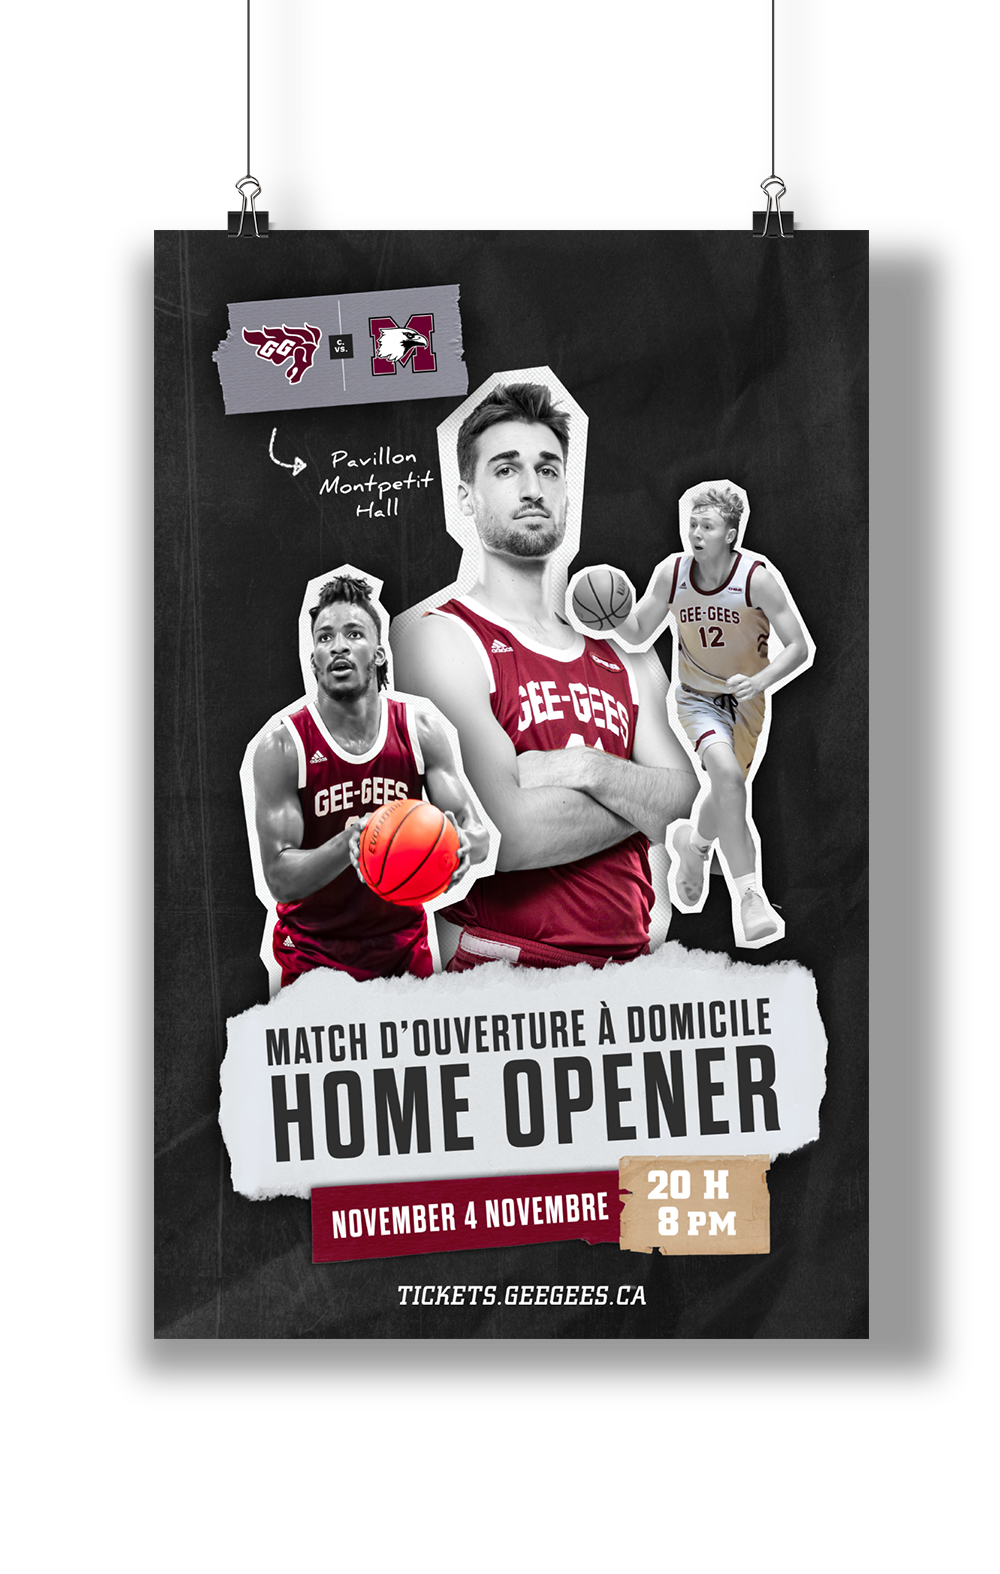 Poster promoting men's basketball game.